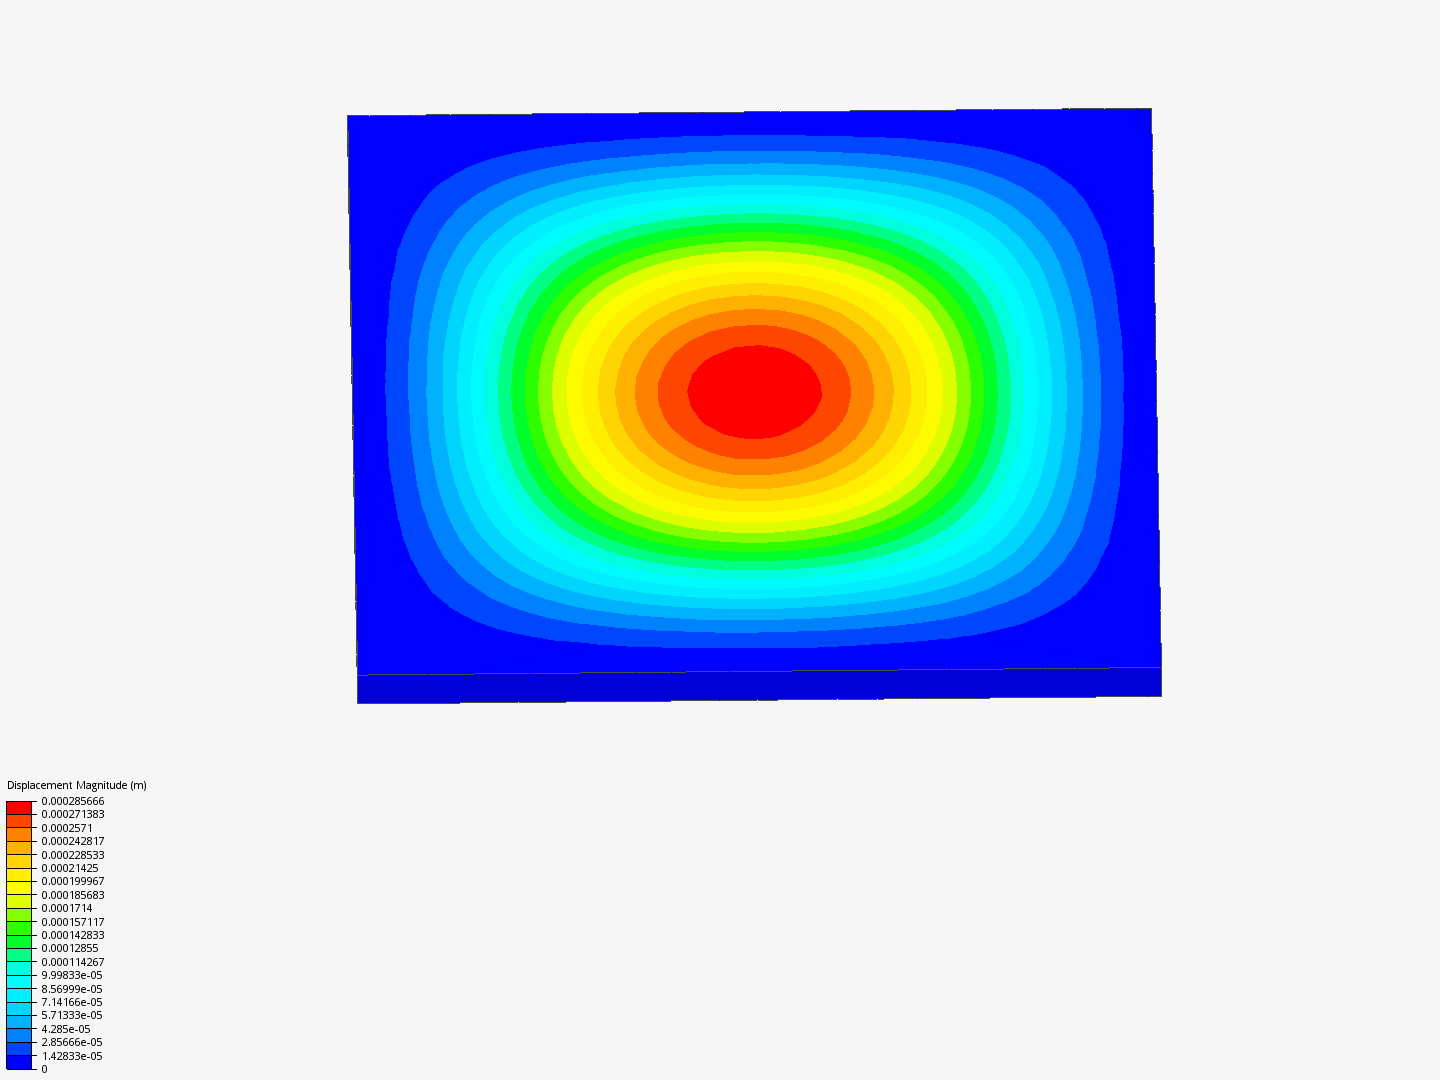 Plate Analysis image